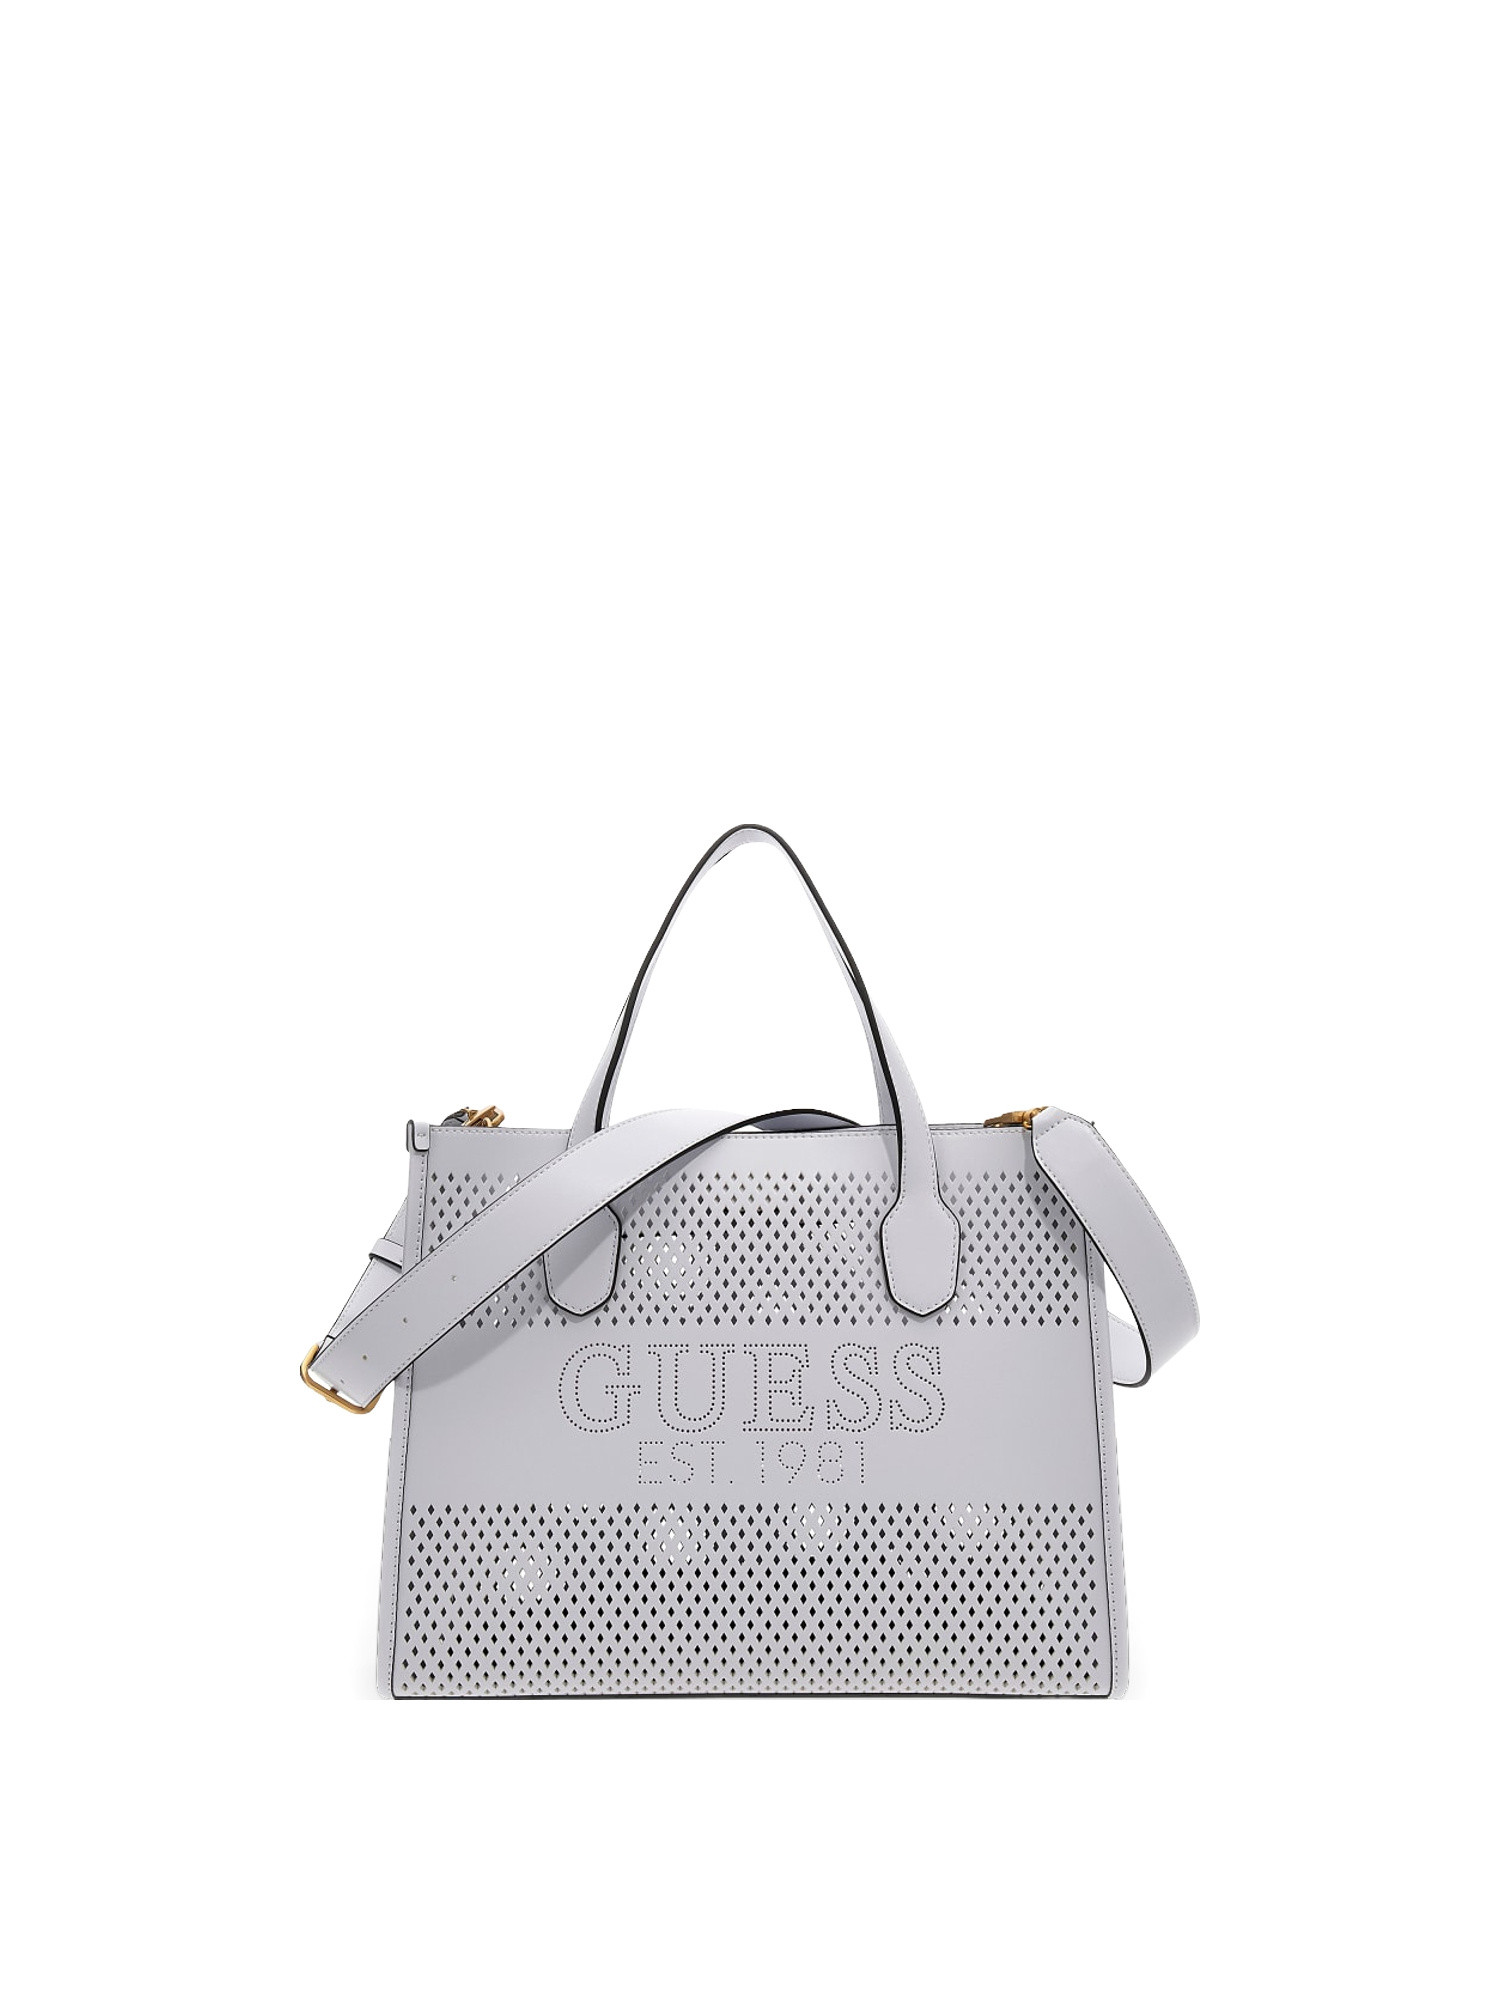 Guess - Katey perforated handbag, White, large image number 0